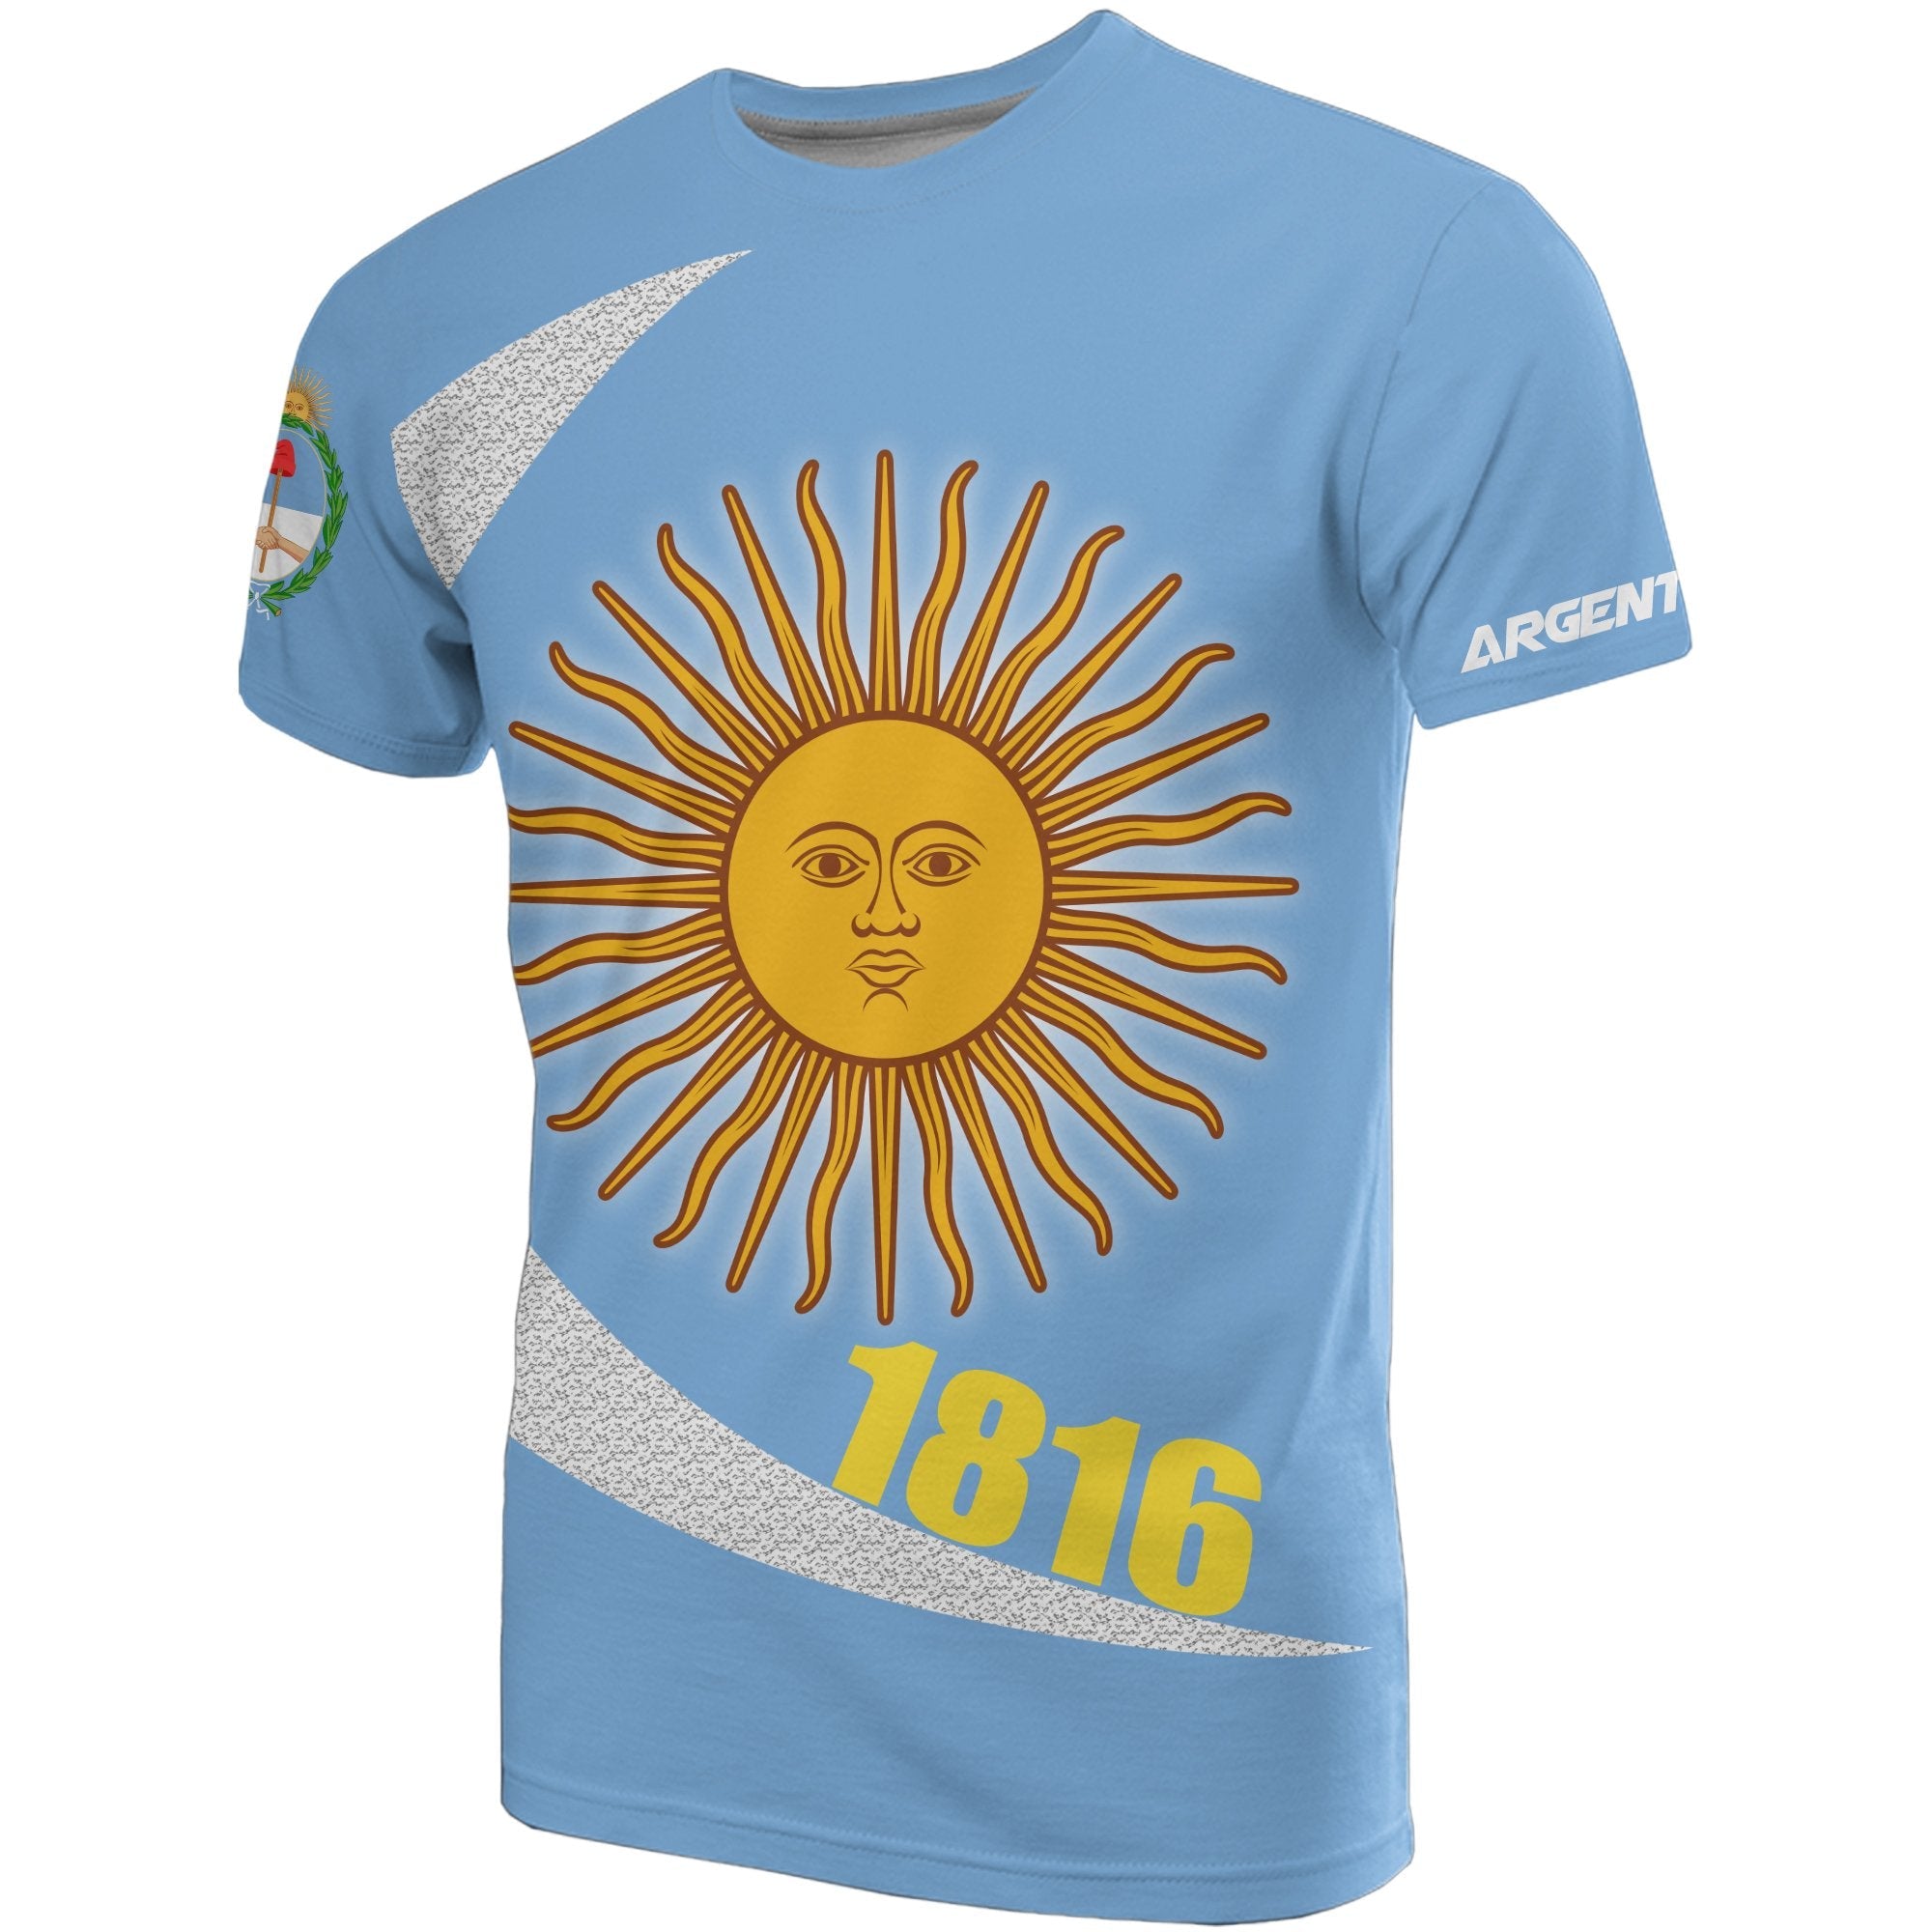 argentina-day-1816-t-shirt